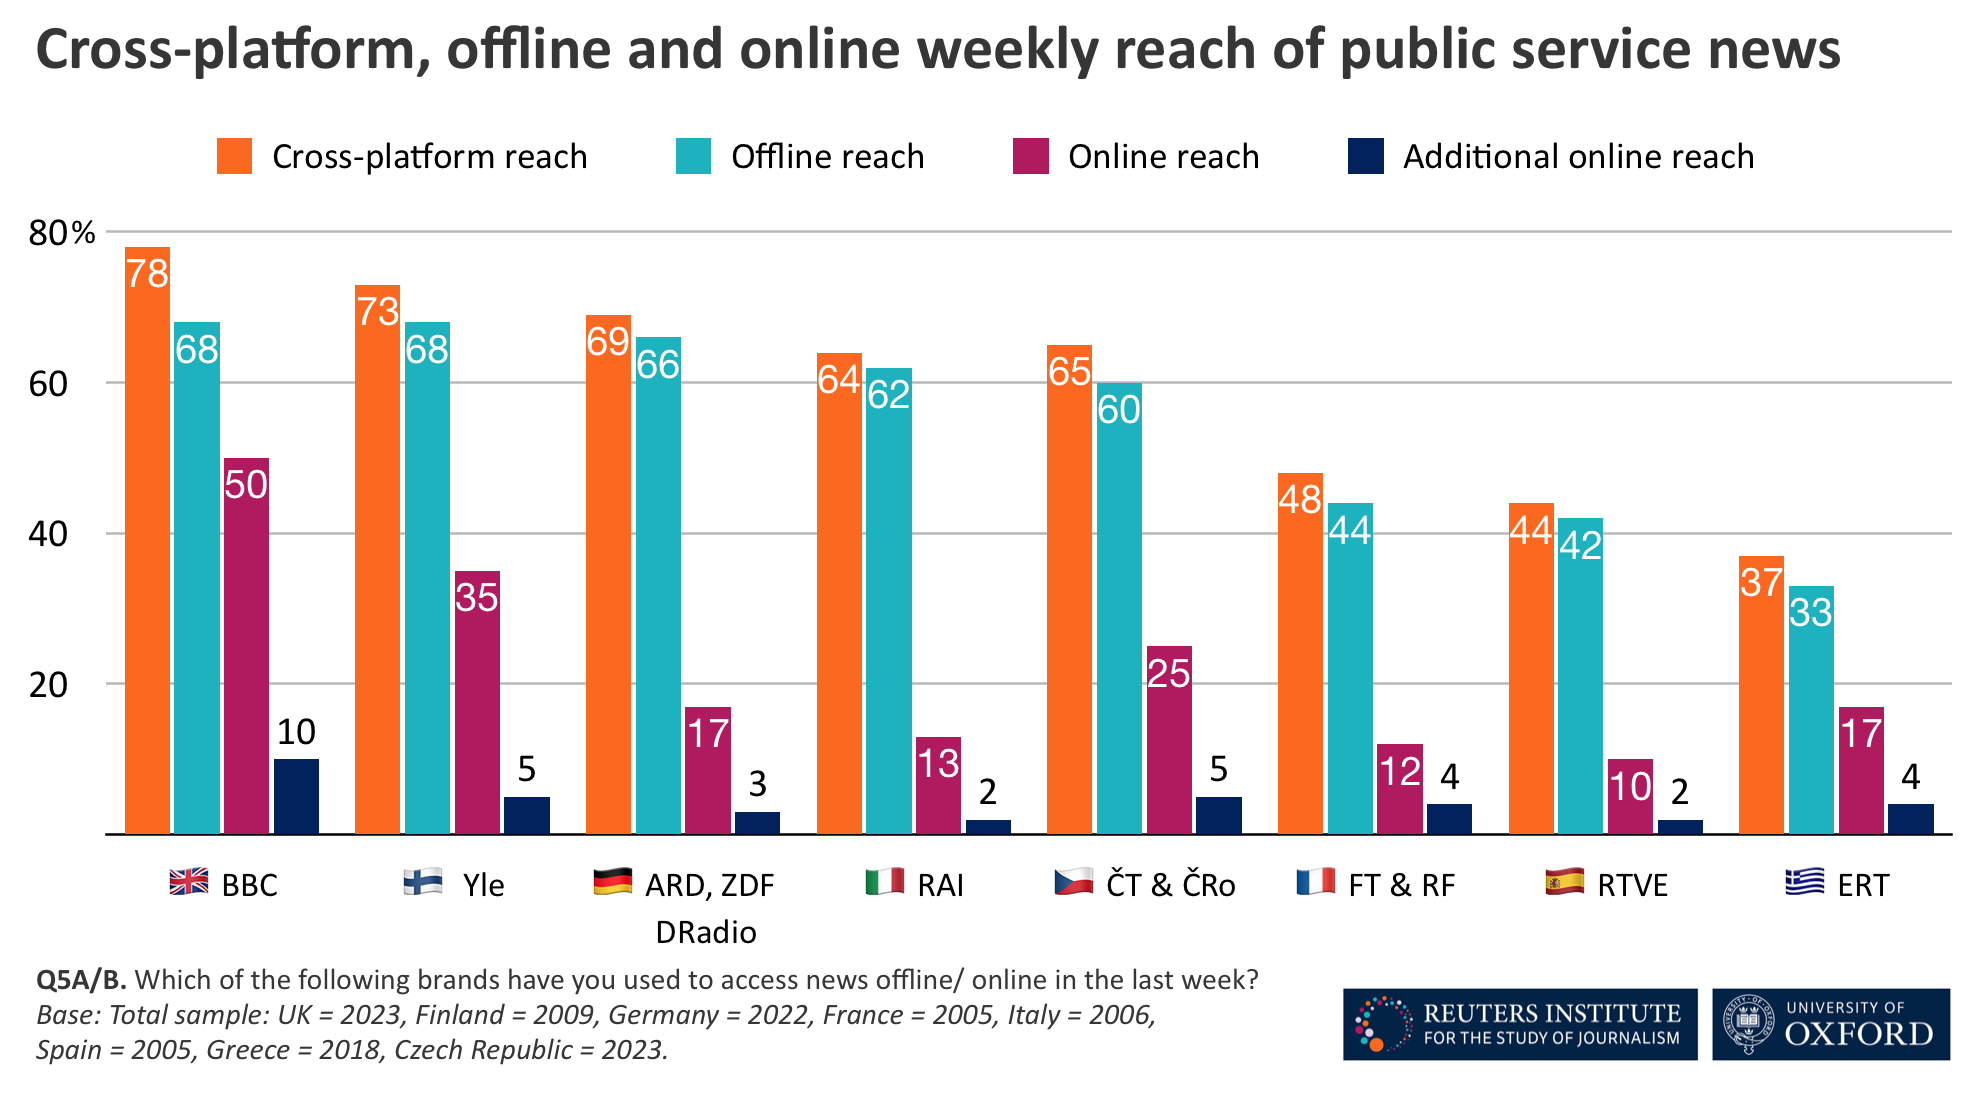 Cross-platform reach of public service media in 8 European countries